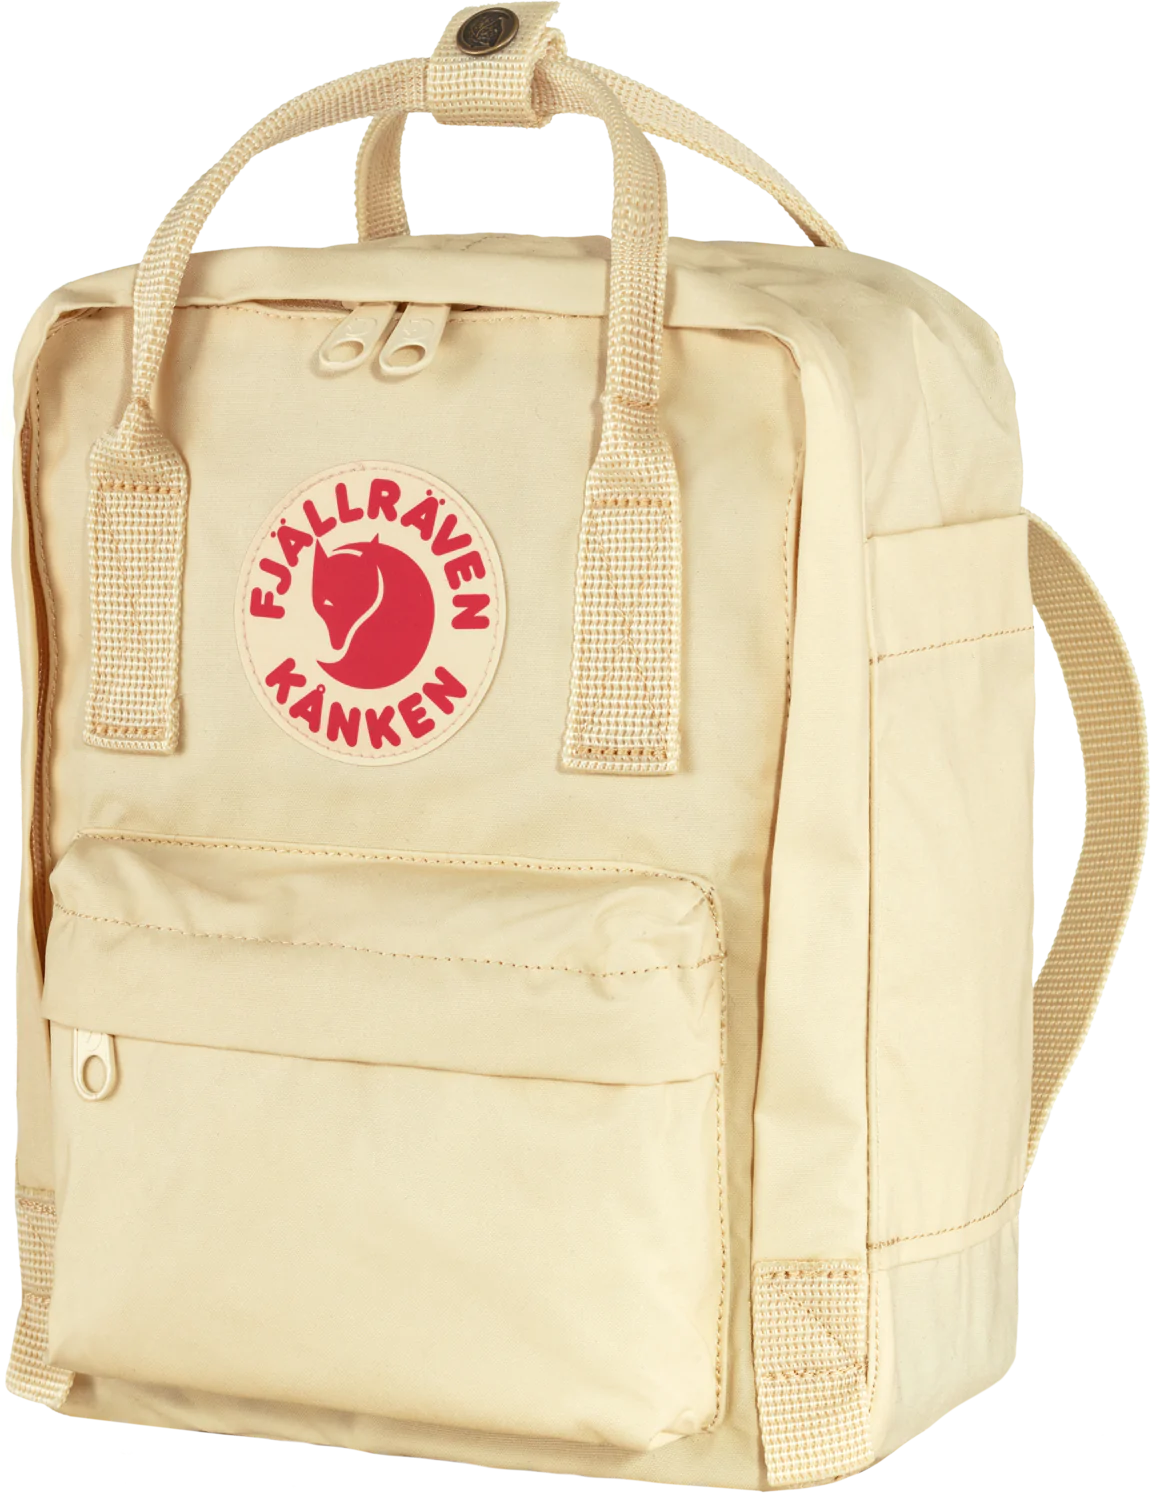 Yellow Kanken Mini Backpack